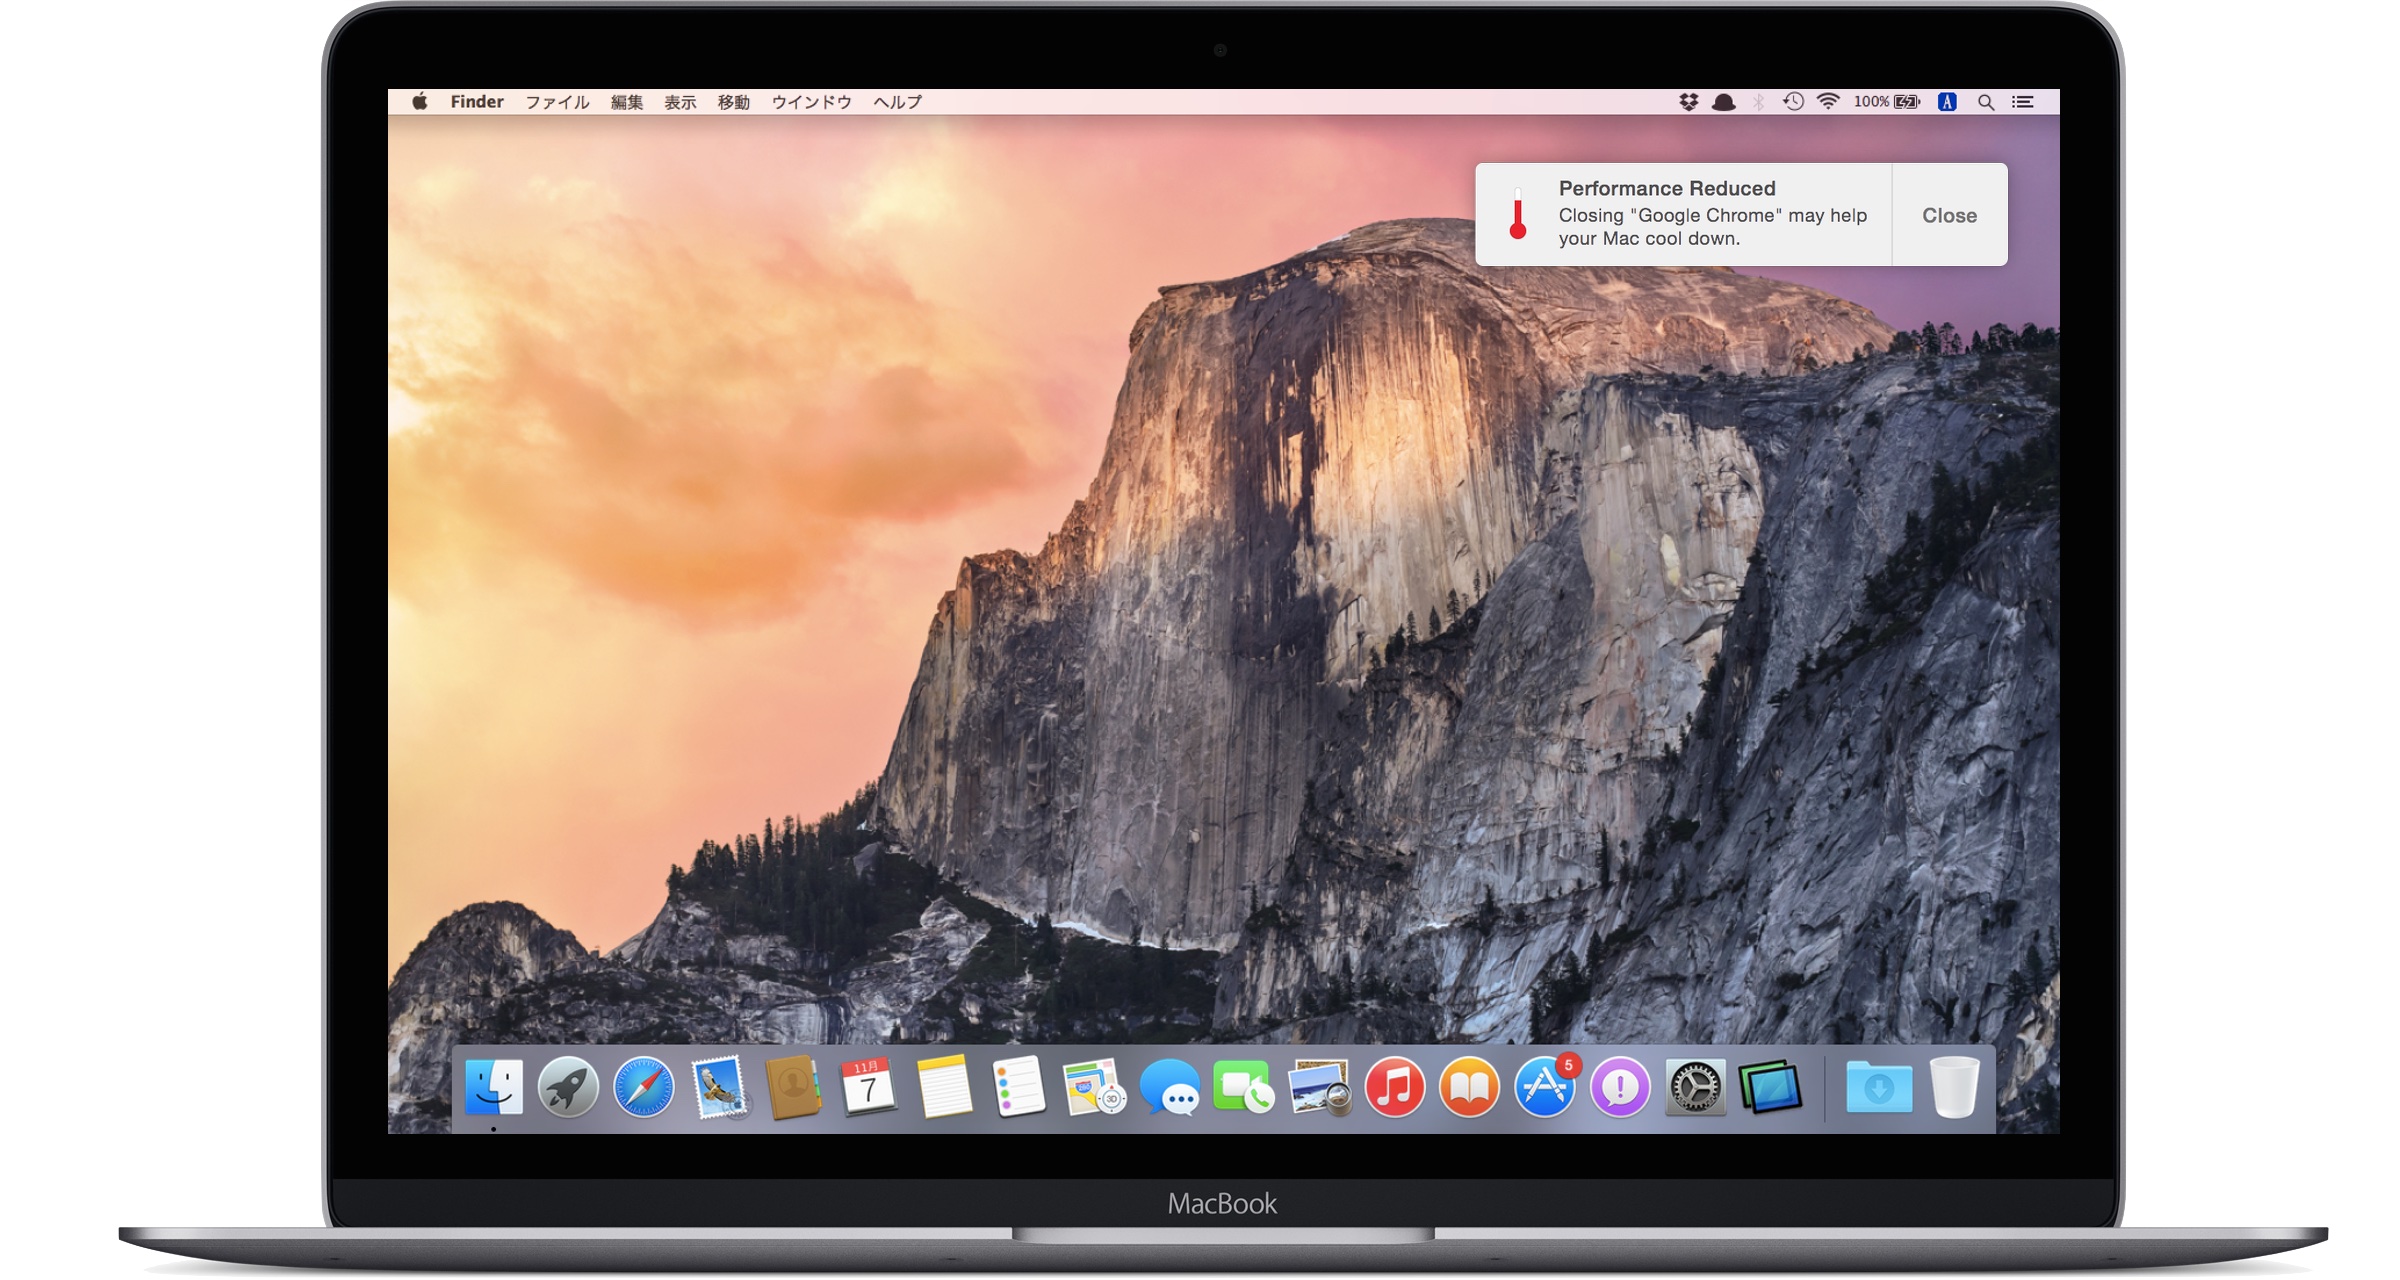 MacBook (Retina, 12-inch, Early 2015)ではMacの温度が上がると通知が表示され、OS X 10.10.3では温度情報などを取得できるAPIも提供されているもよう。